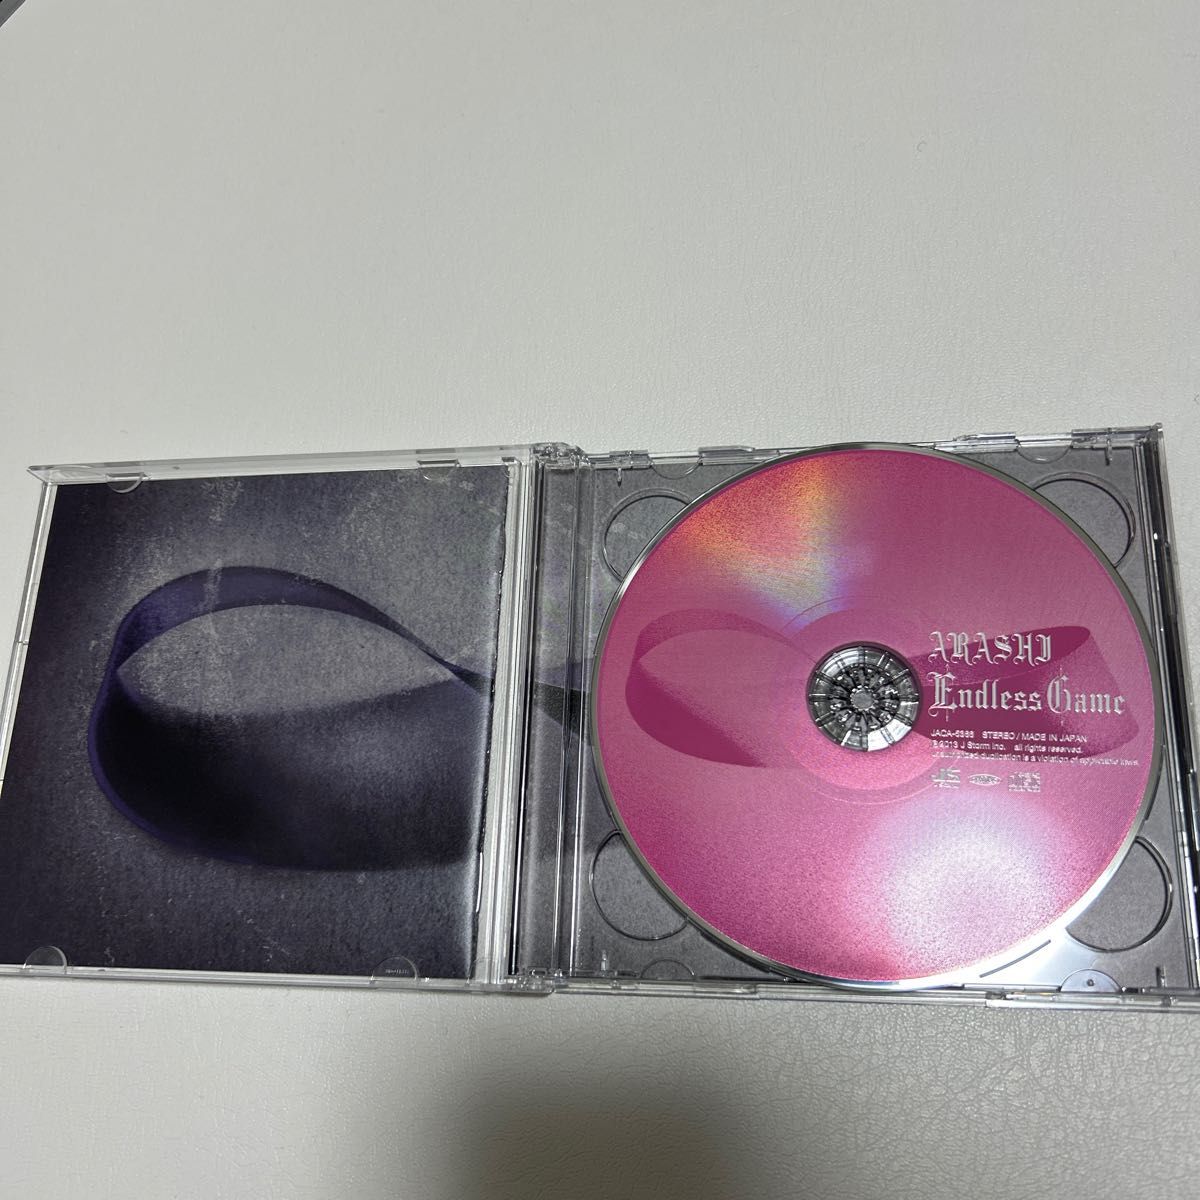 Endless Game 初回限定盤 CD+DVD